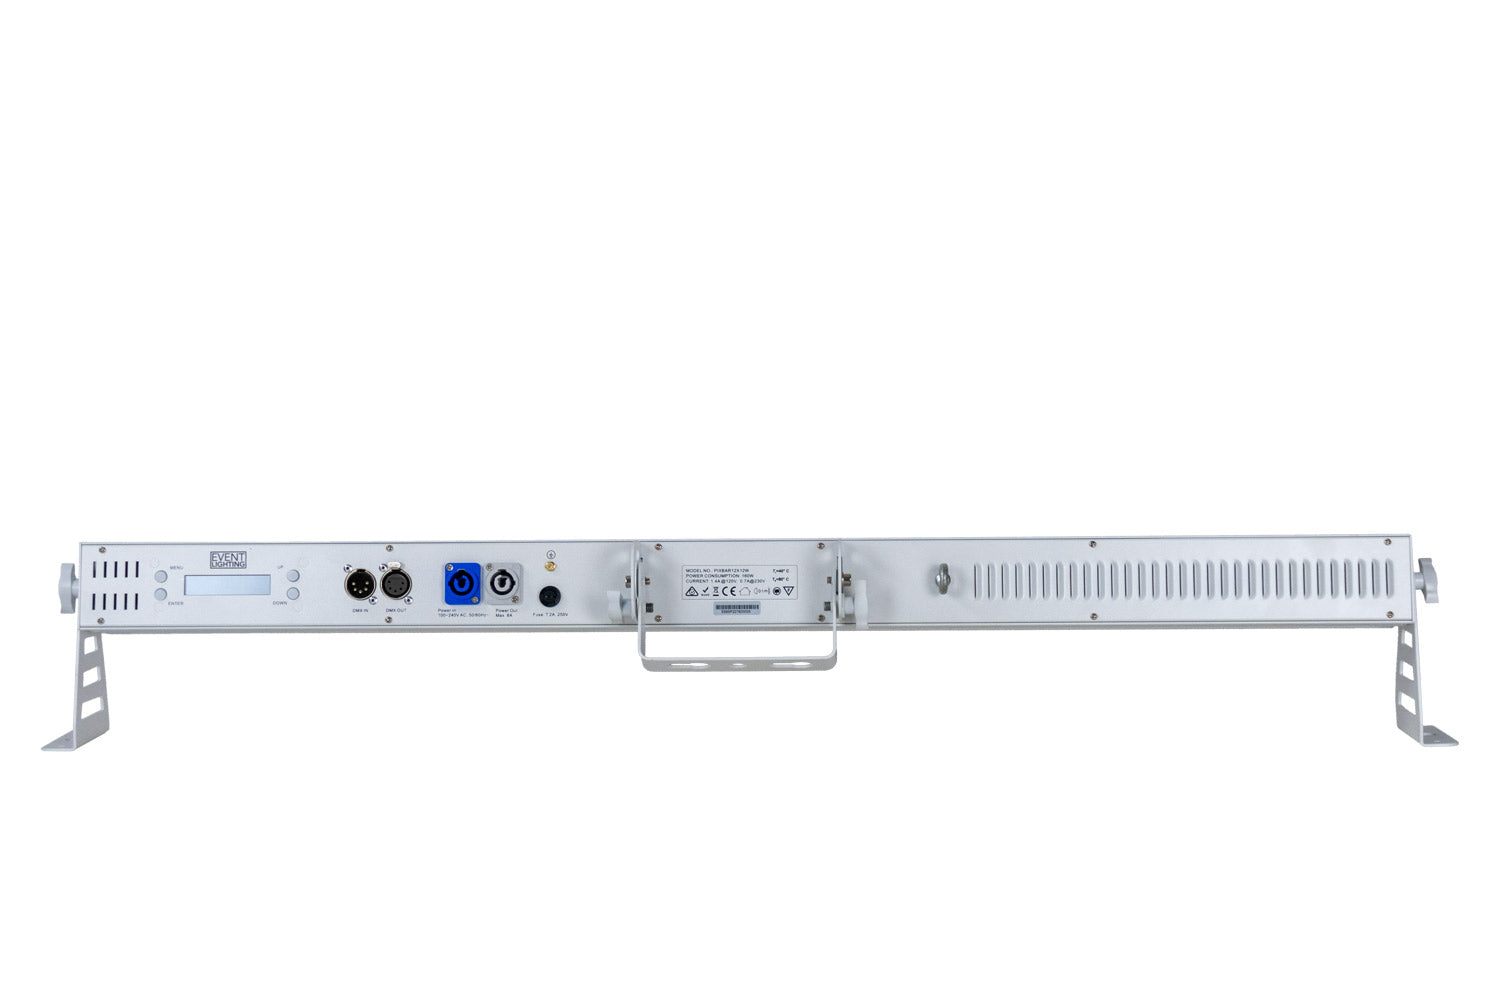 PIXBAR12X12W - 12x 12 W RGBWAU Pixel Control Bar (White)